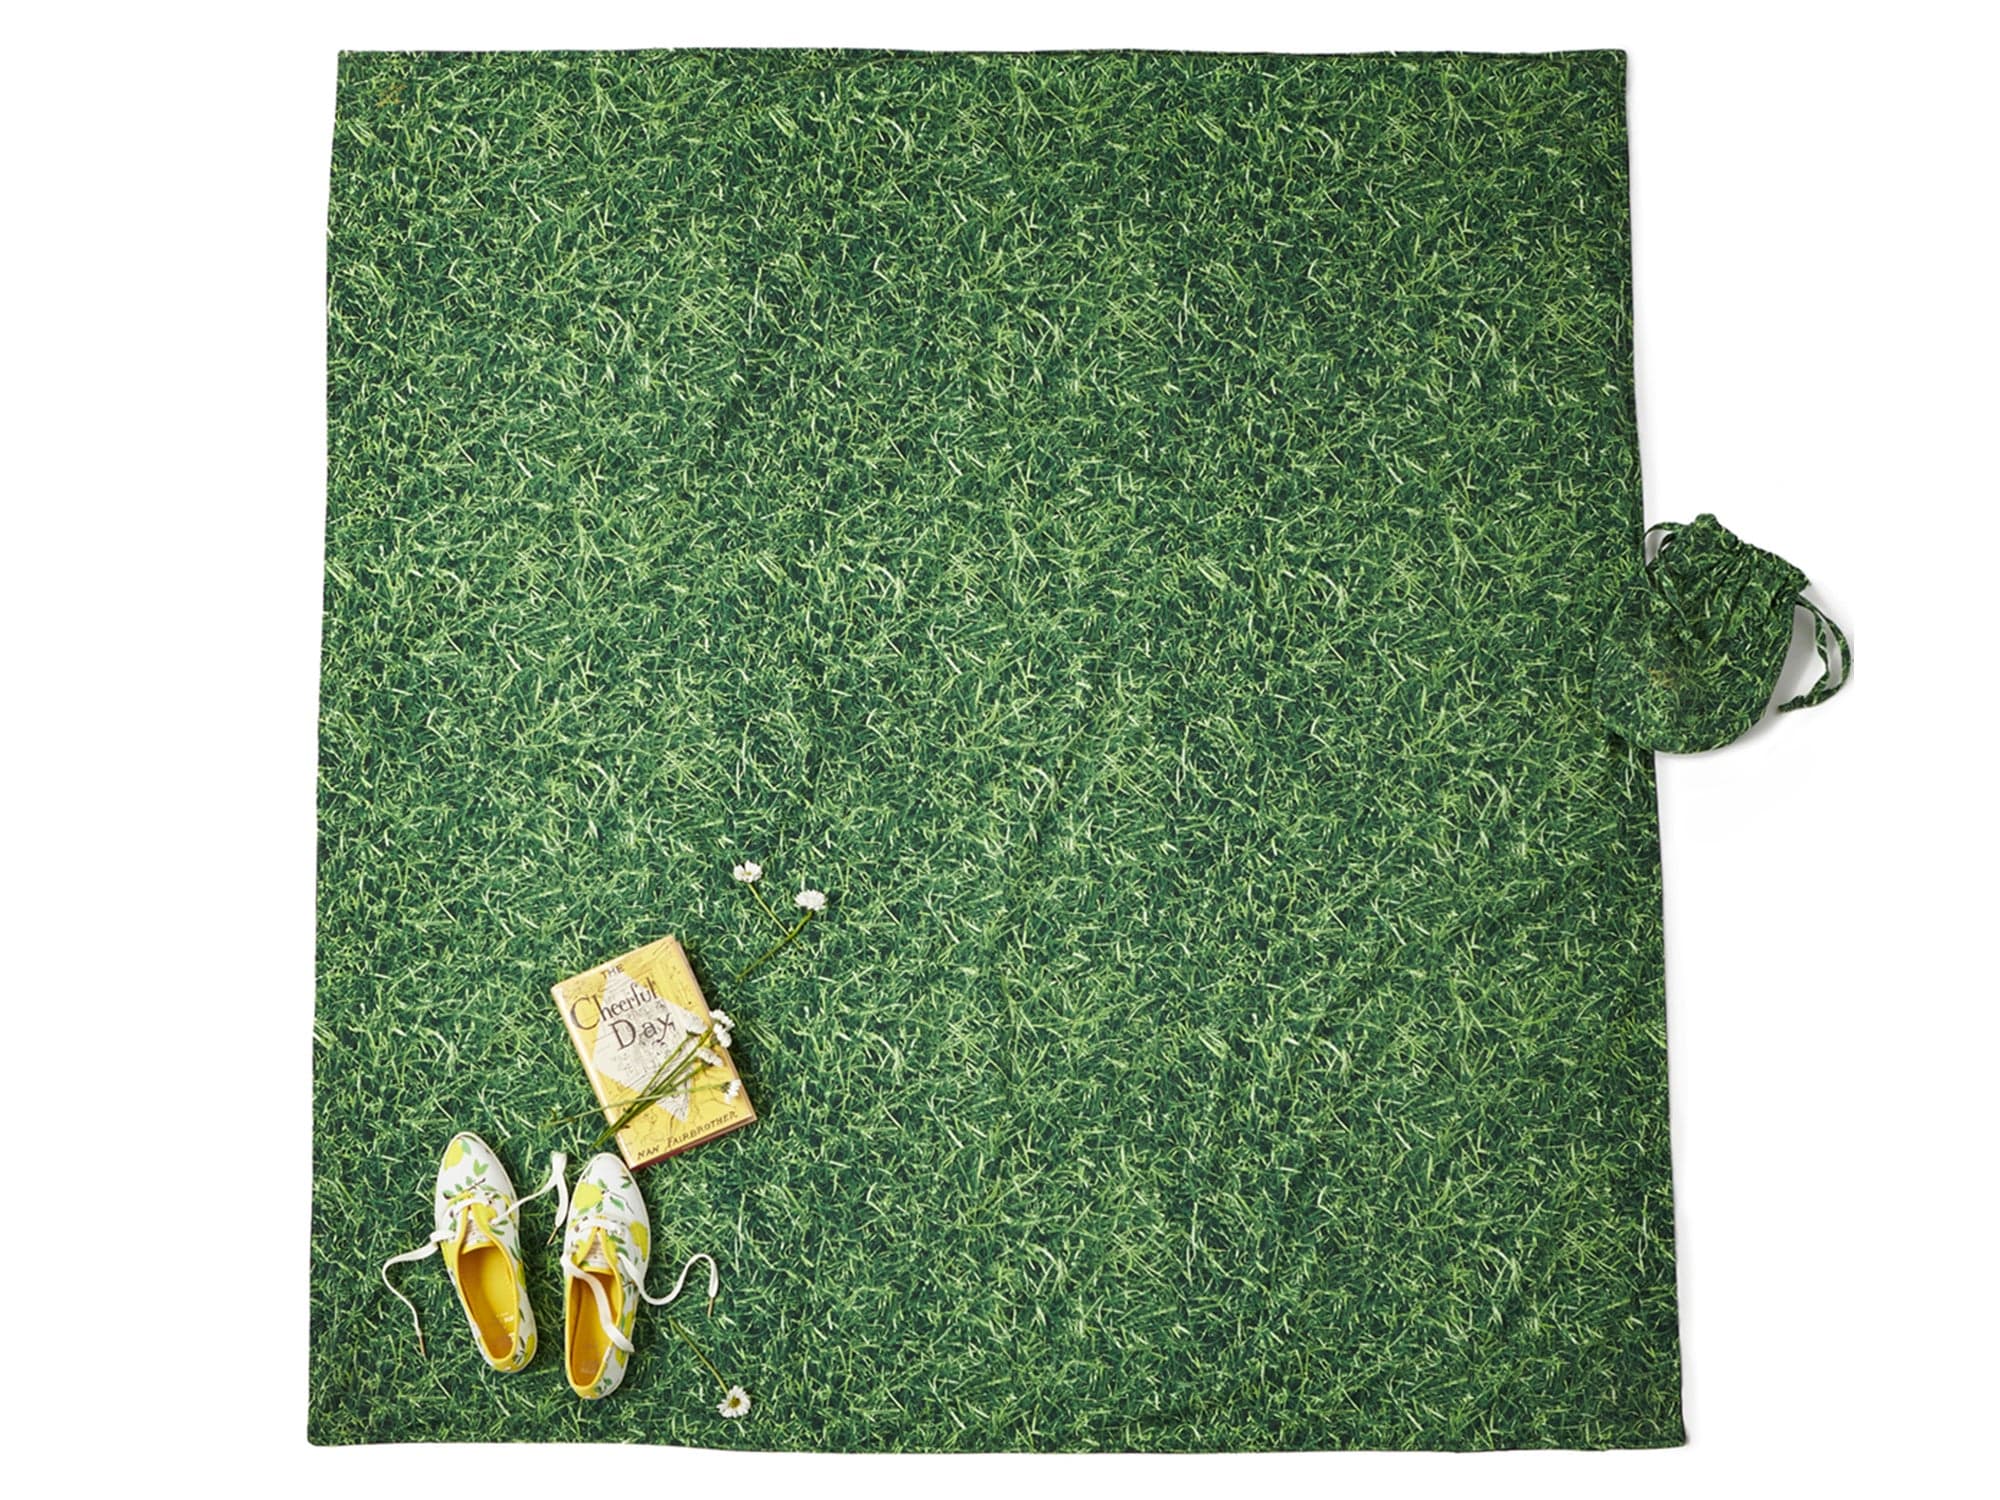 Kate Spade green grass picnic blanket